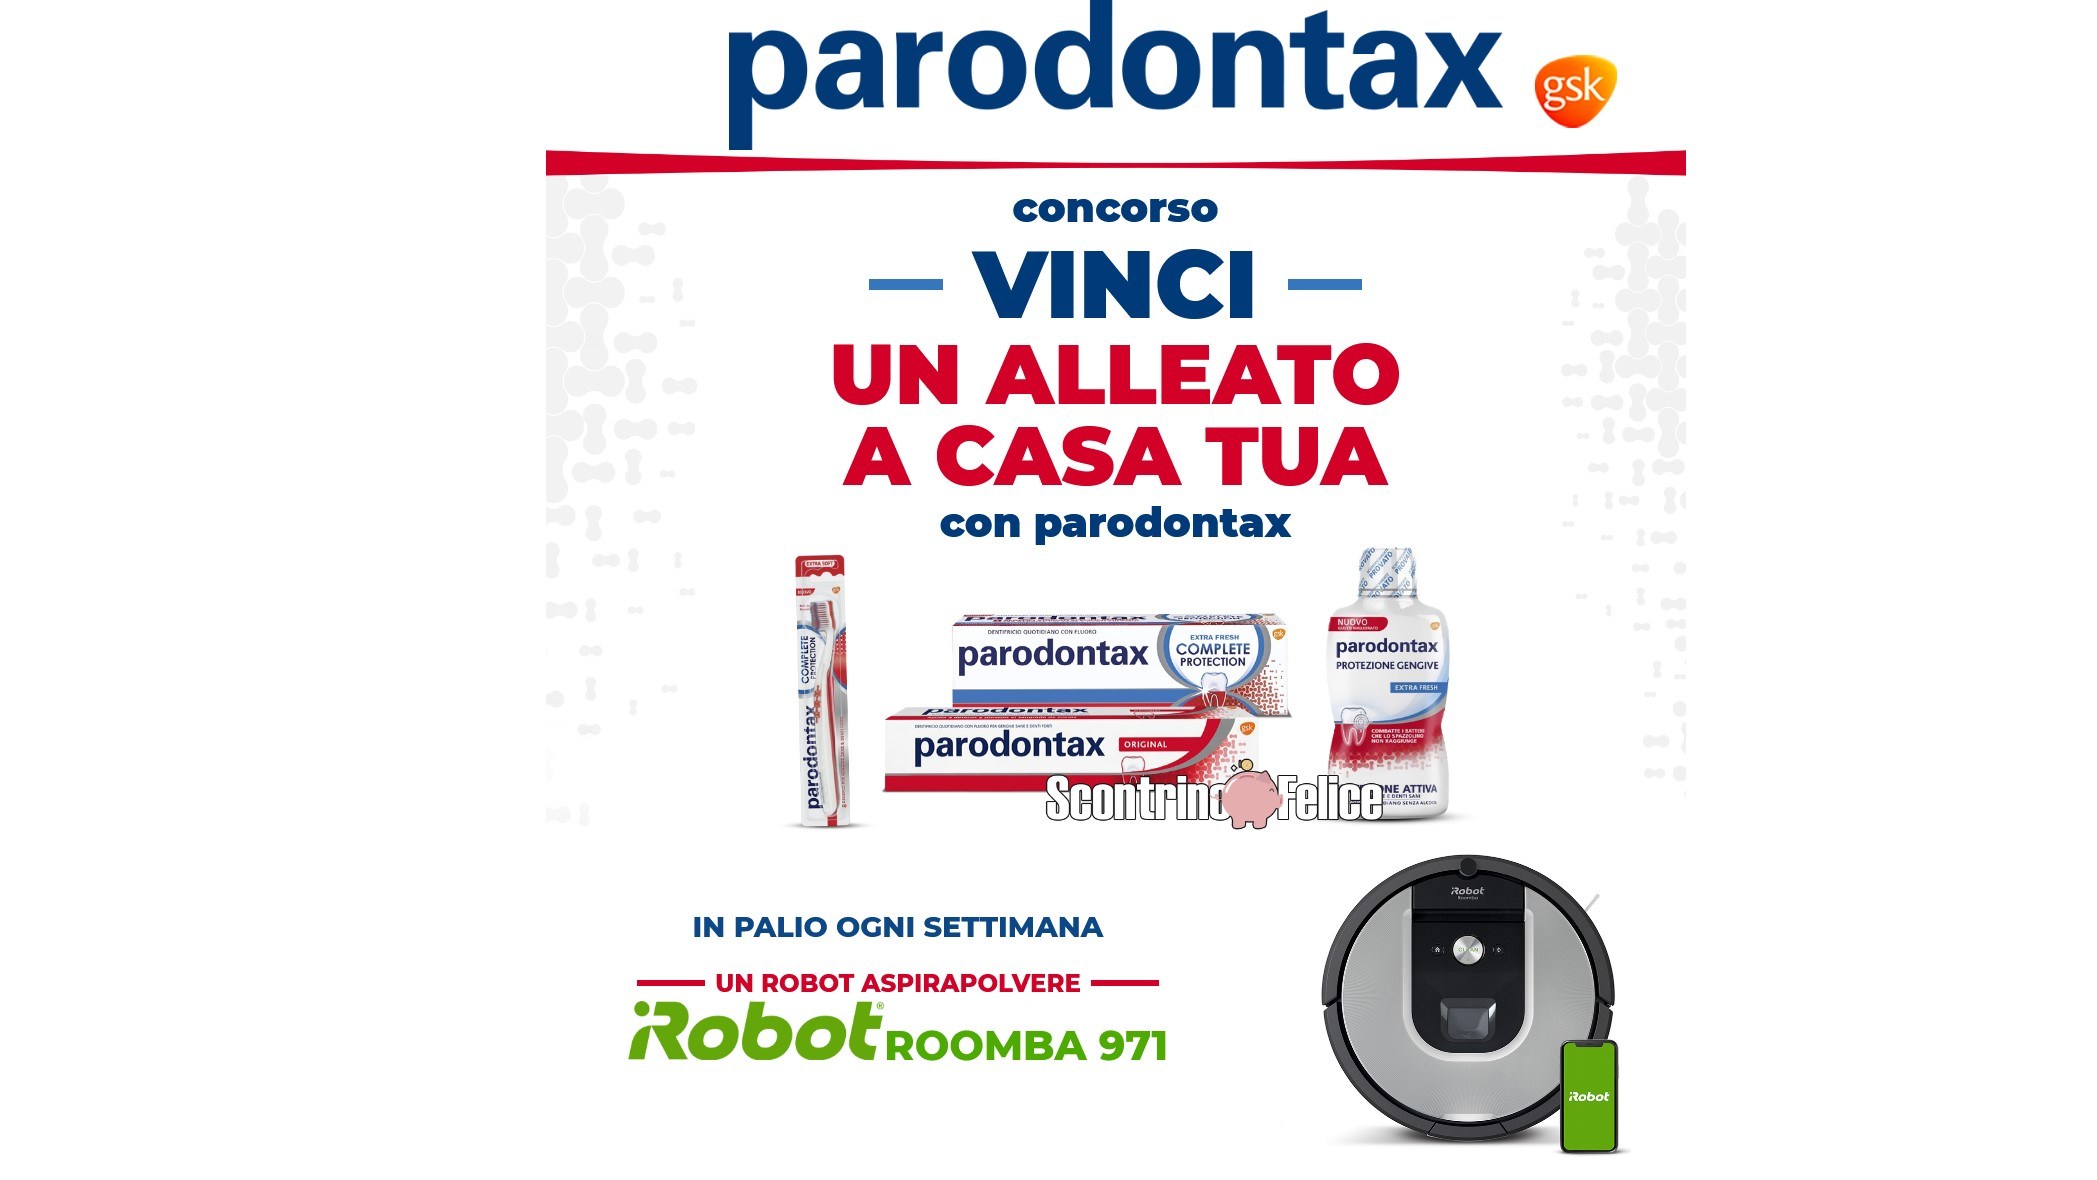 Concorso Vinci un alleato a Casa Tua con Parodontax vinci robot aspirapolvere iRobot Roomba